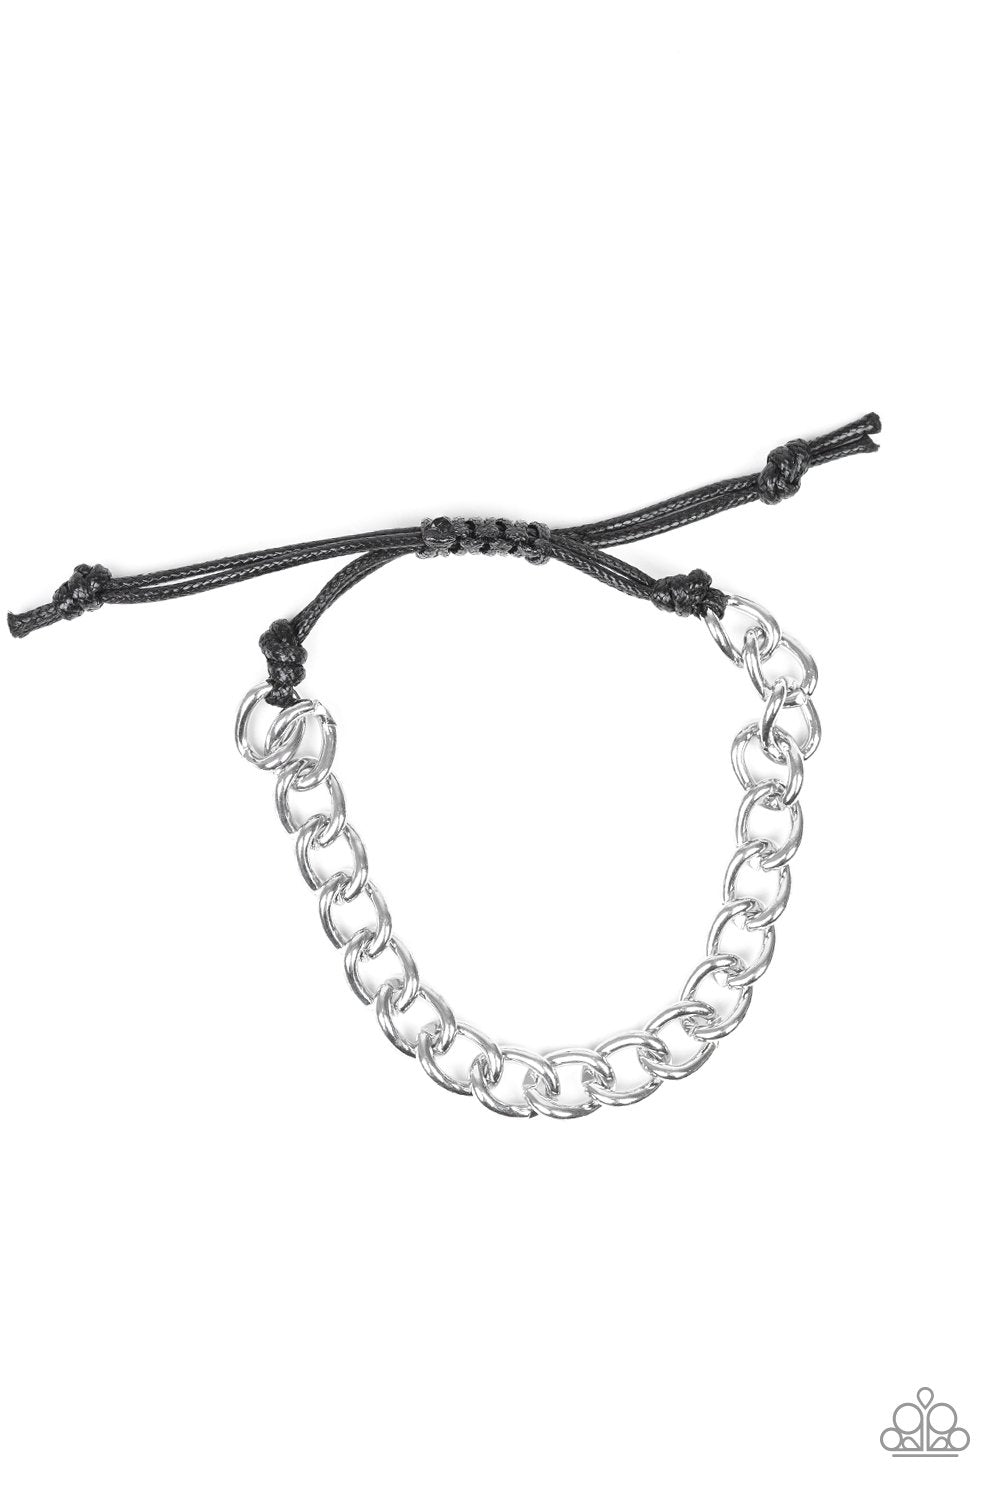 Sideline Silver Urban Bracelet freeshipping - JewLz4u Gemstone Gallery